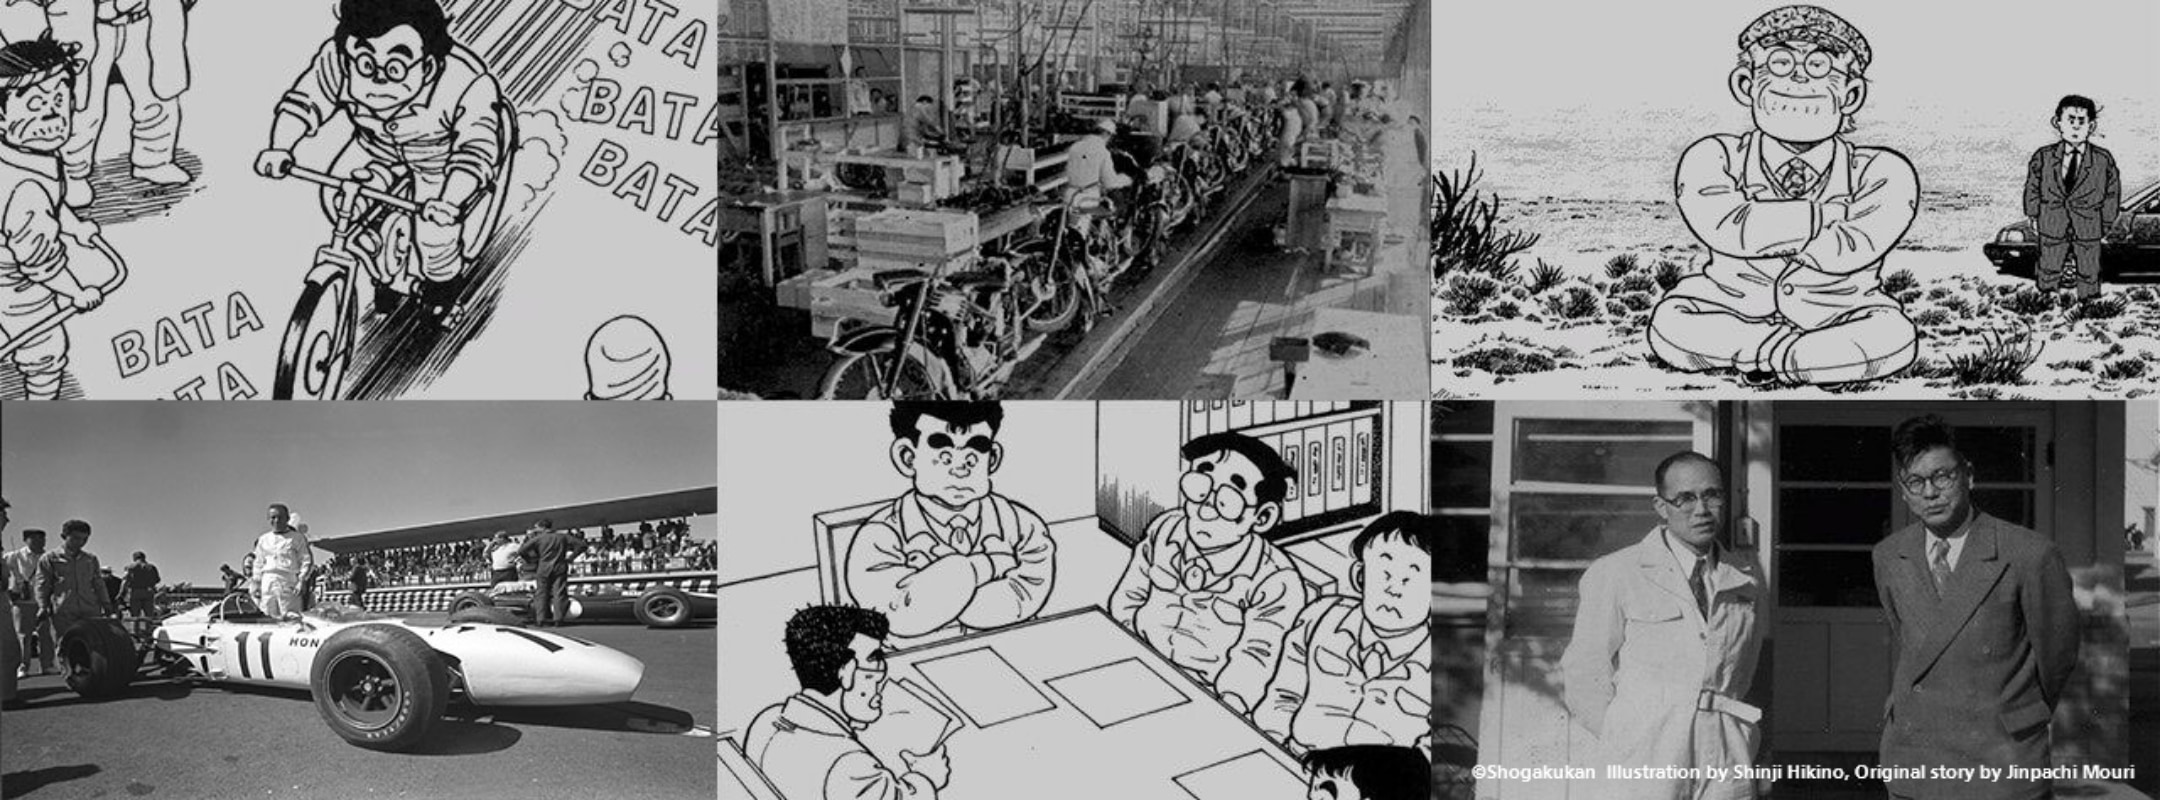 Honda Origins - The Manga